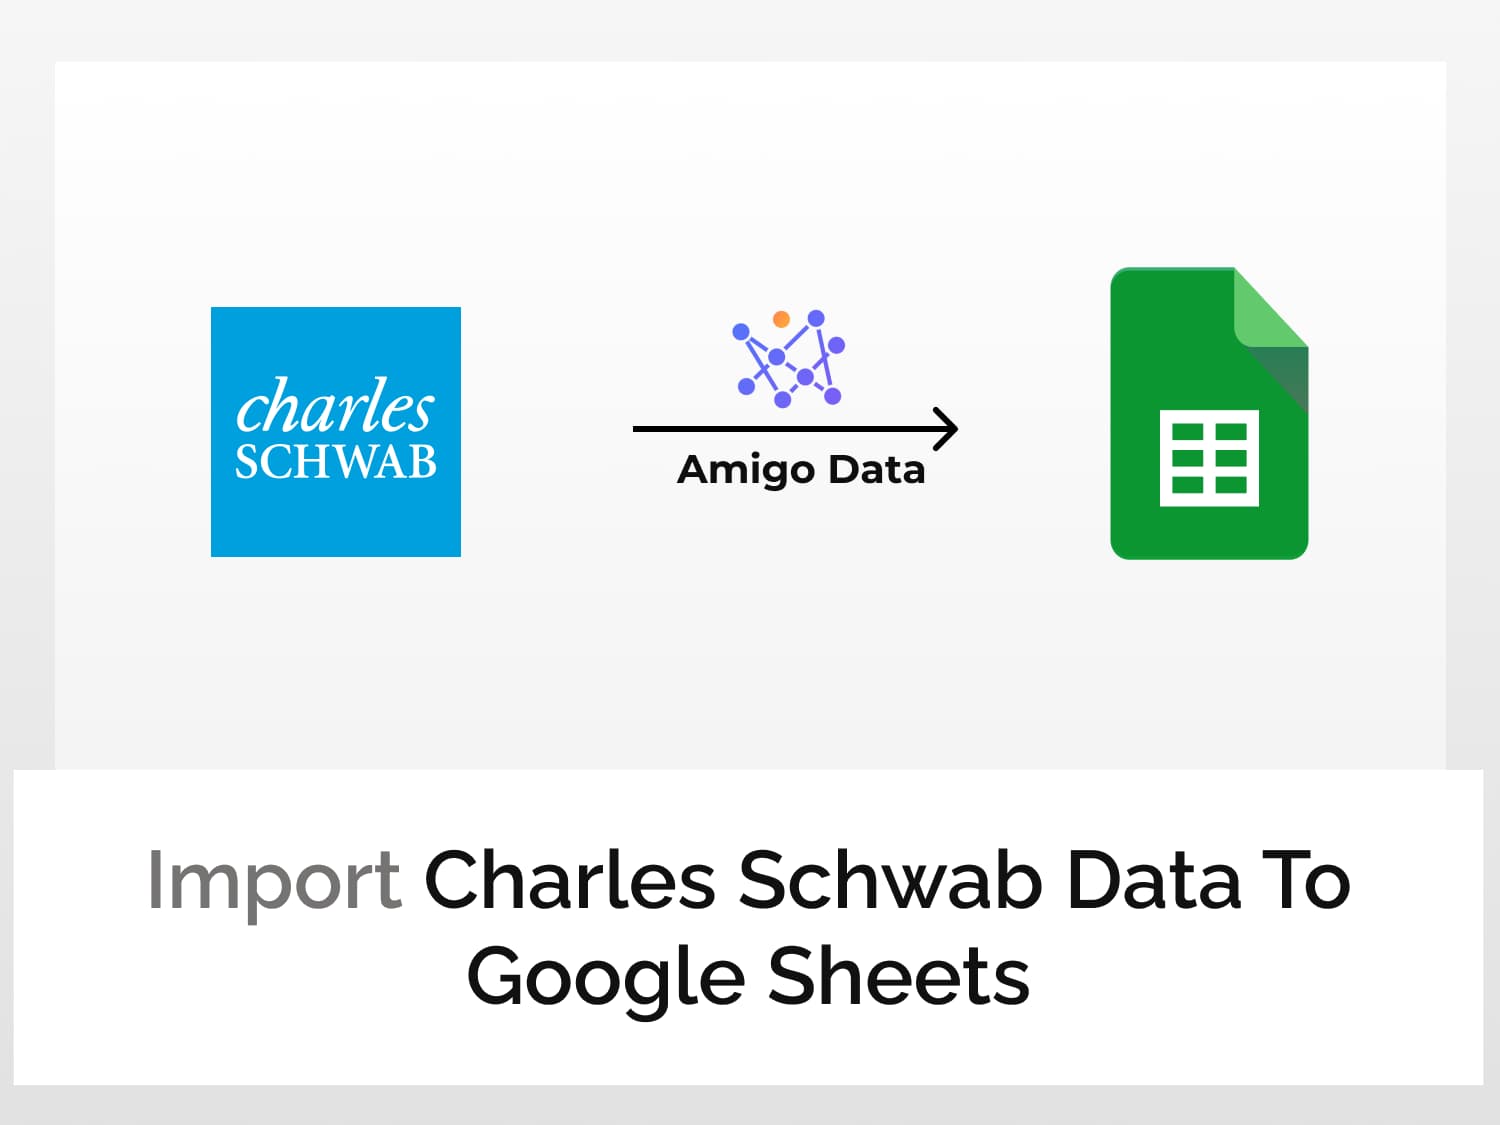 Import Charles Schwab data to Google Sheets